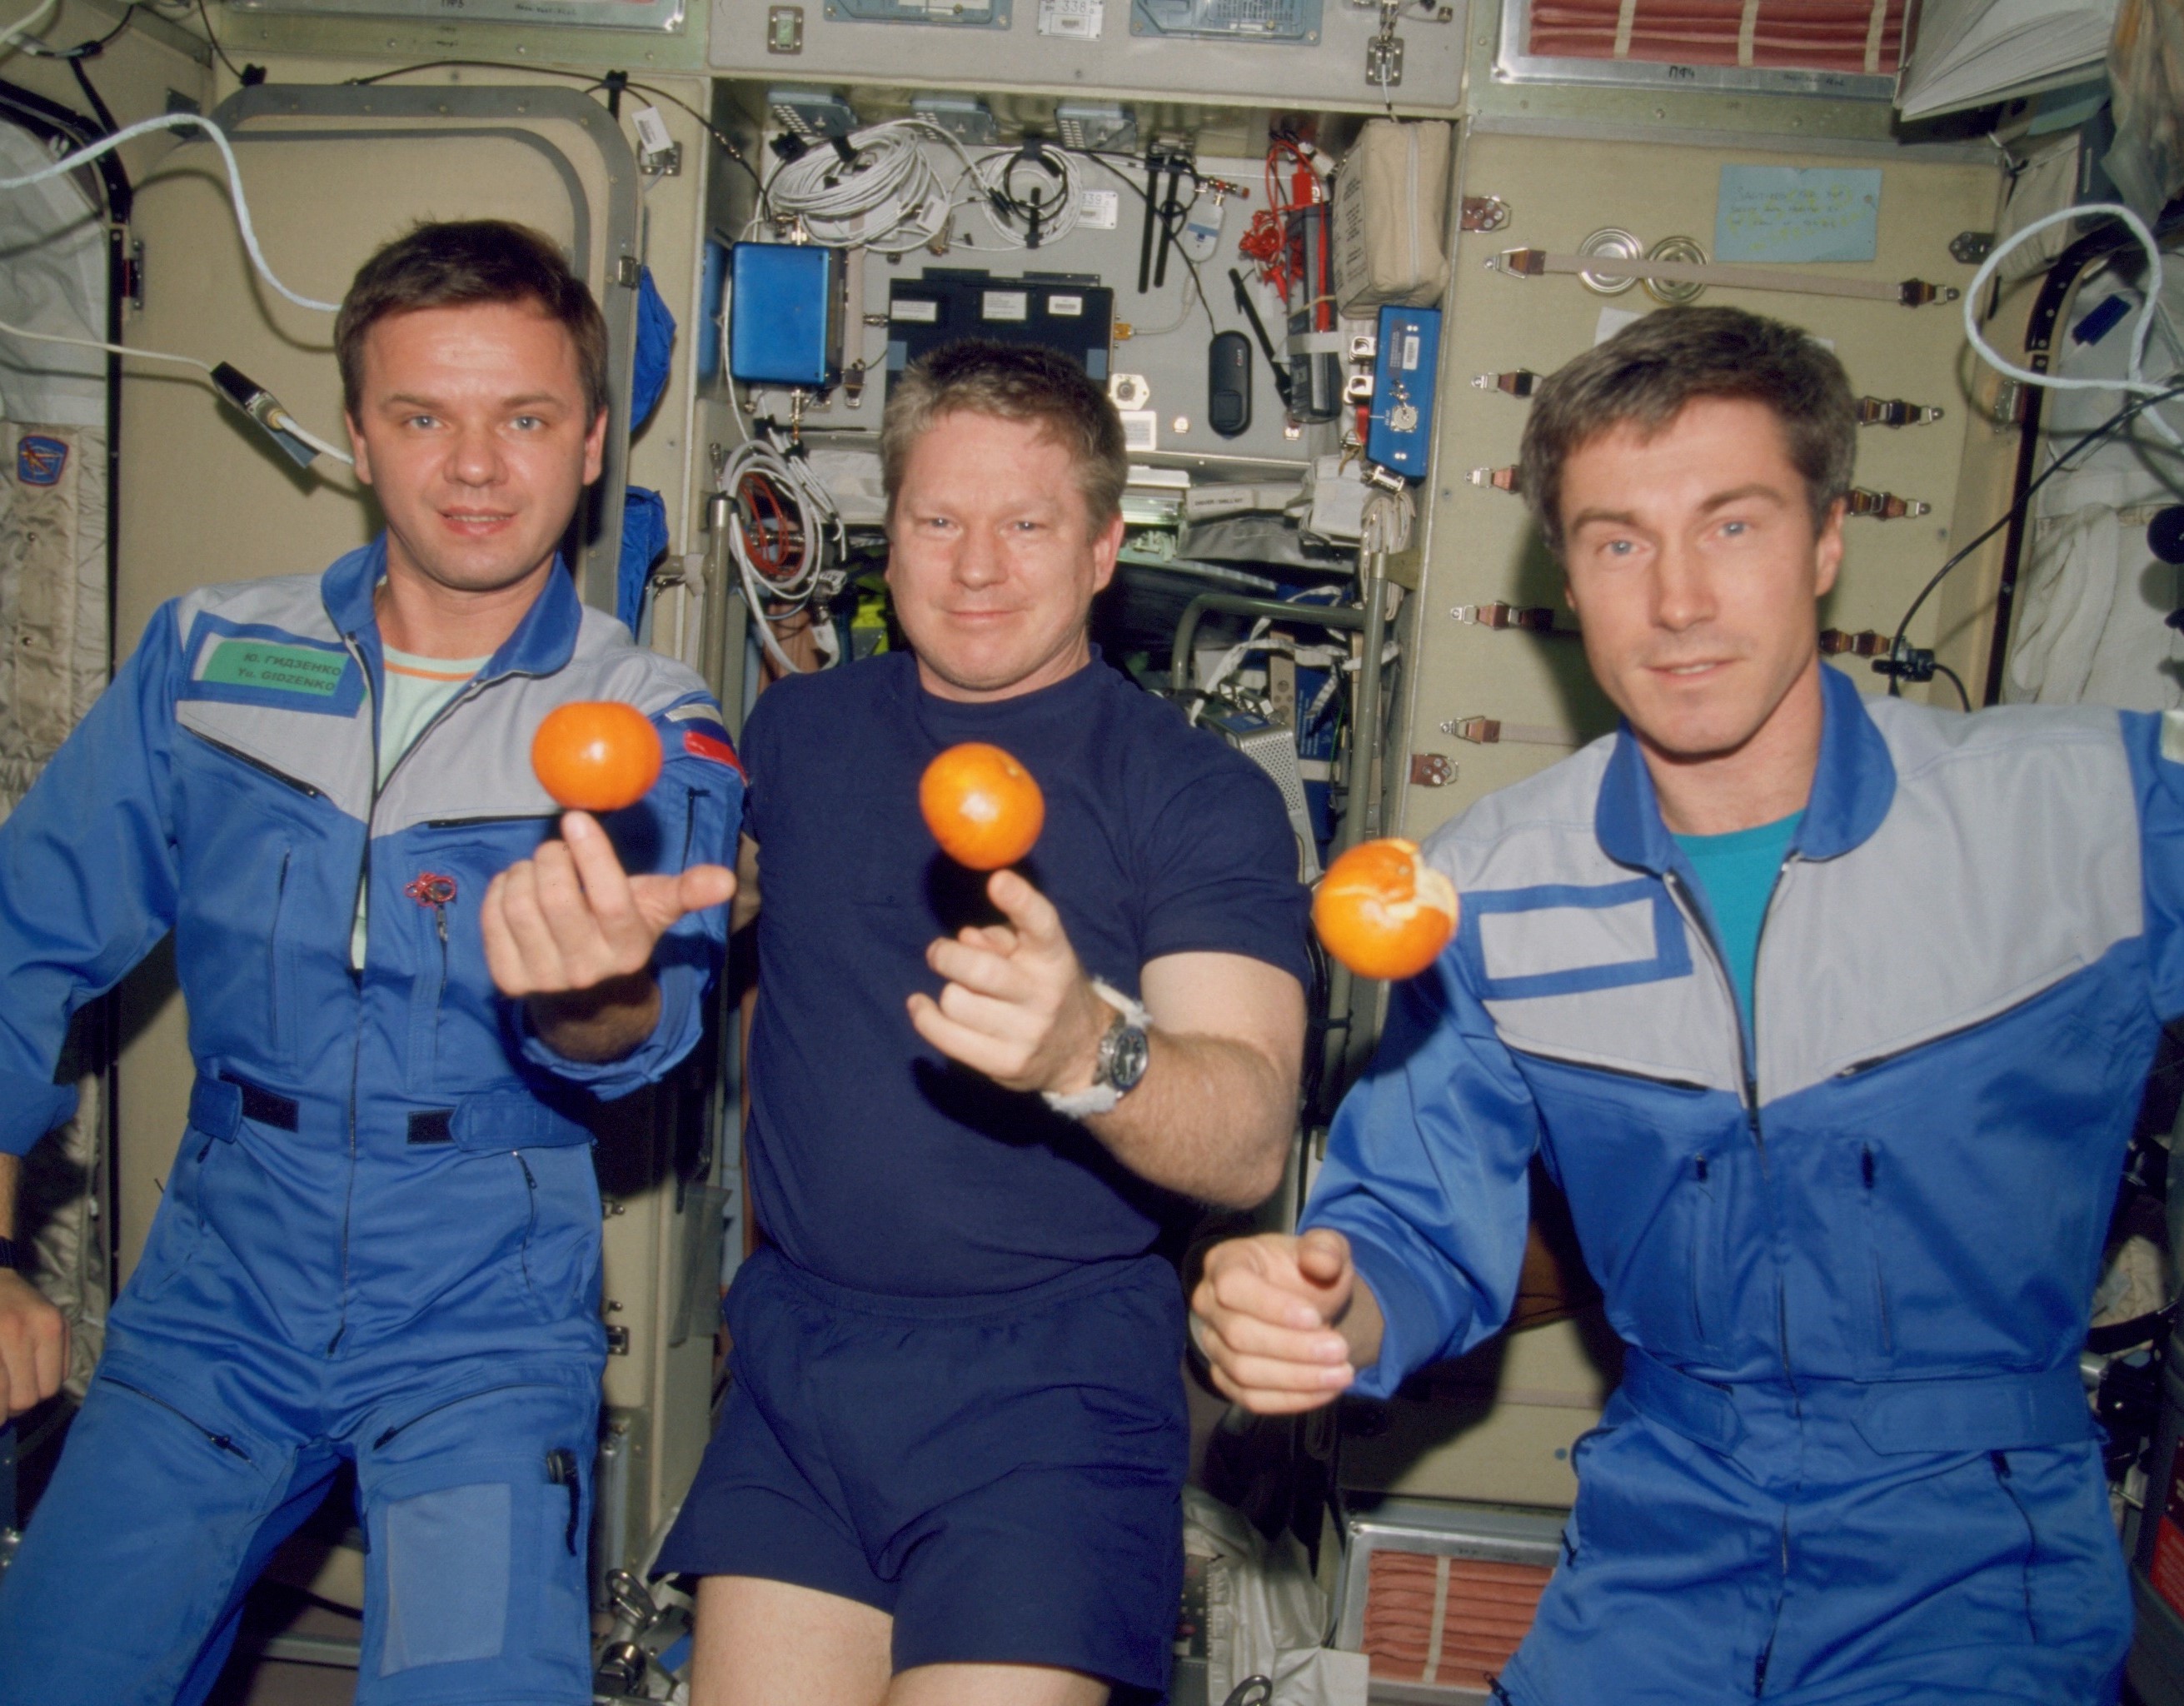 The Expedition 1 crew of Yuri P. Gidzenko of the Russian Space Agency (RSA), now Roscosmos, William M. Shepherd of NASA, and Sergei K. Krikalev of RSA